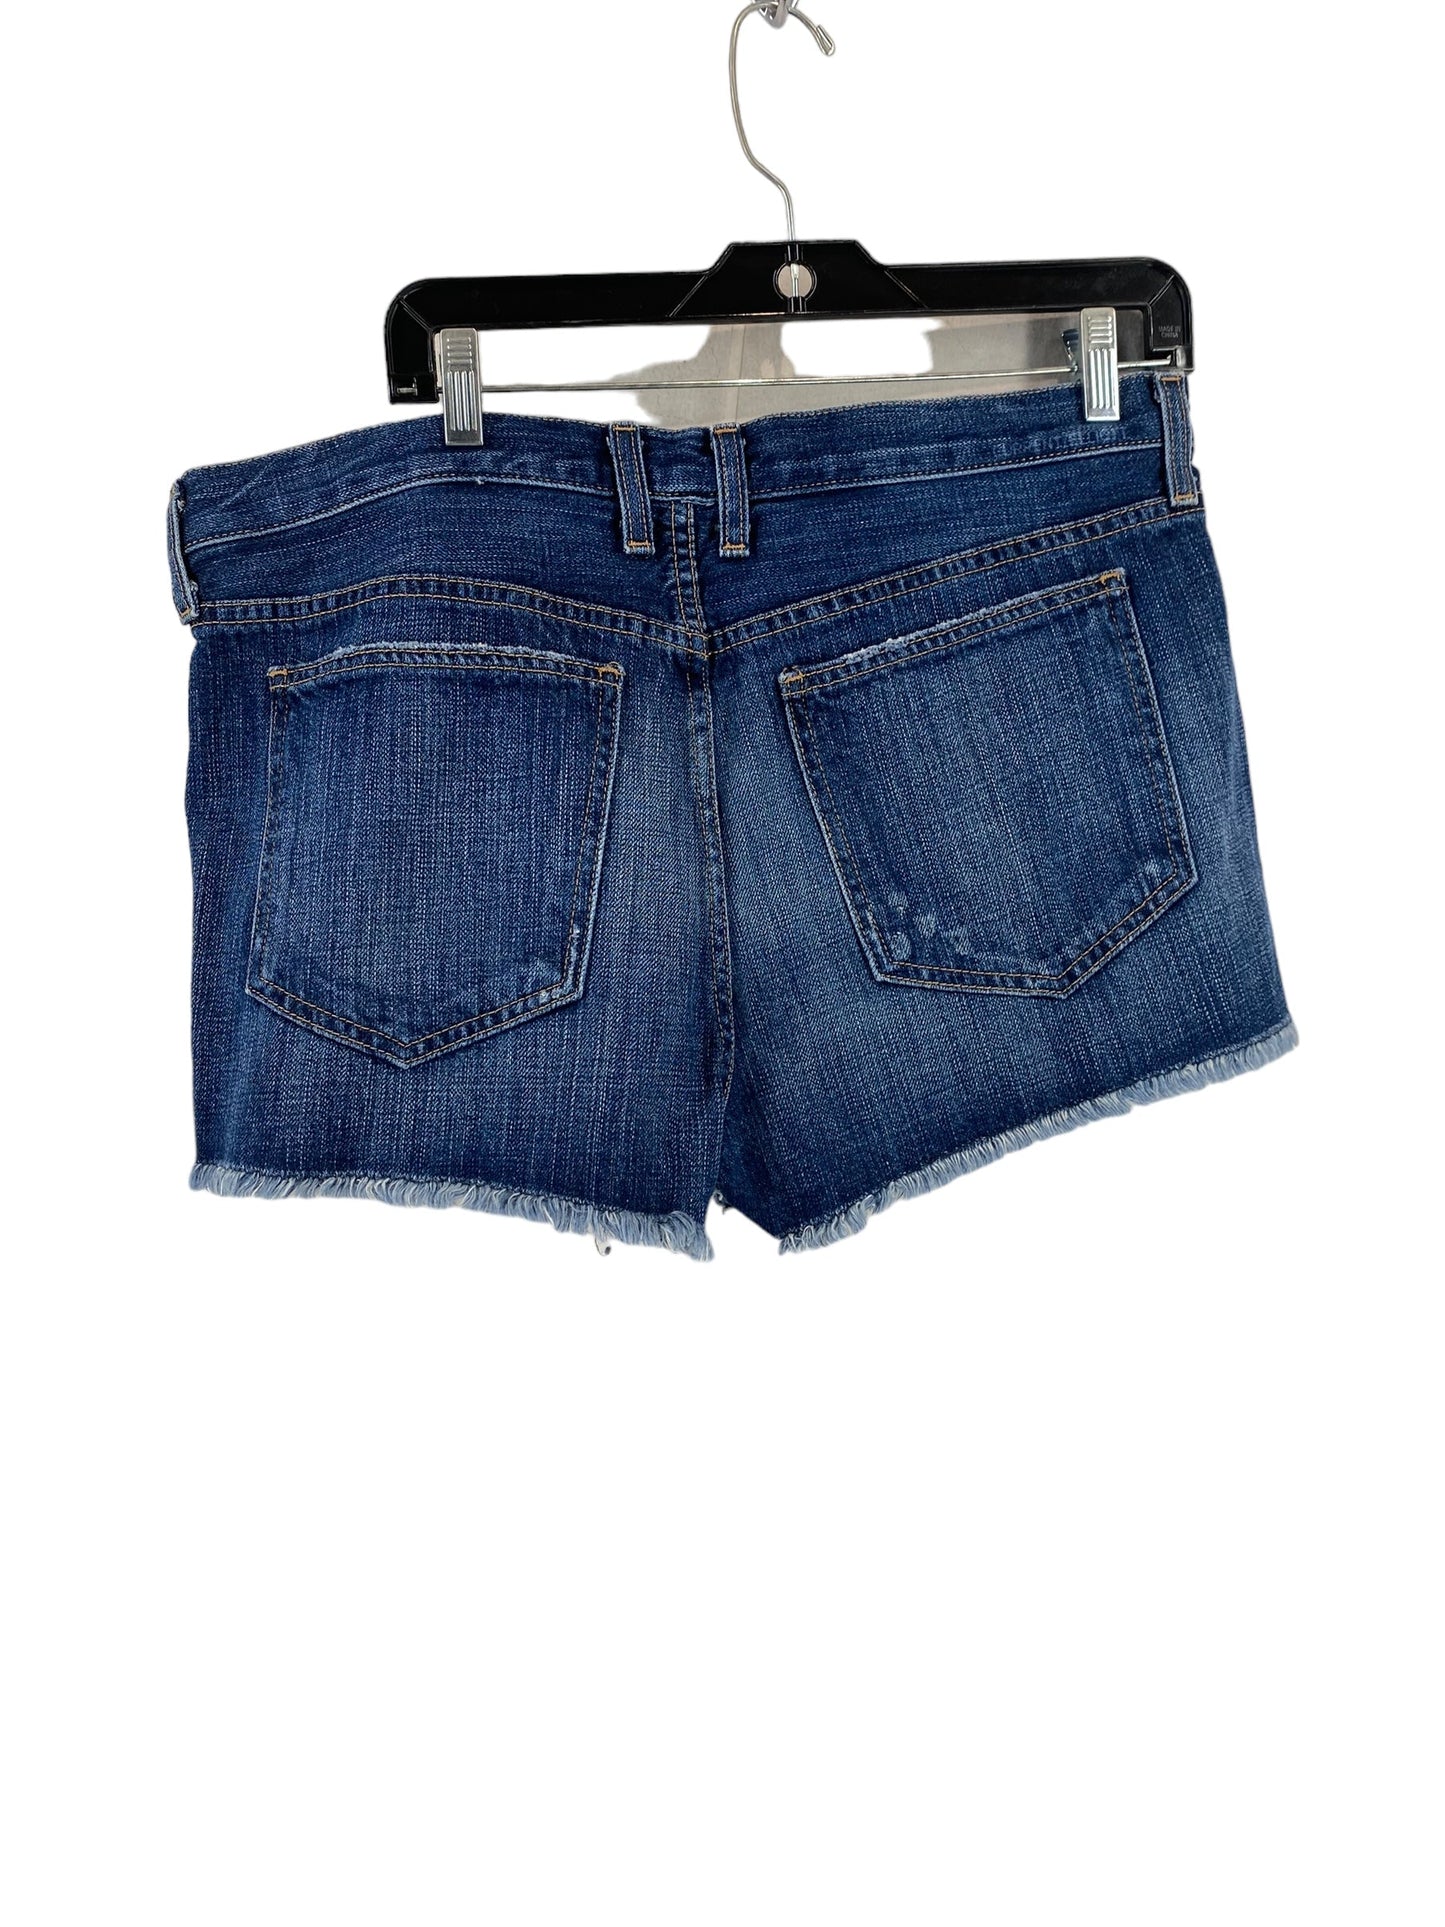 Blue Denim Shorts Current/elliott, Size 31